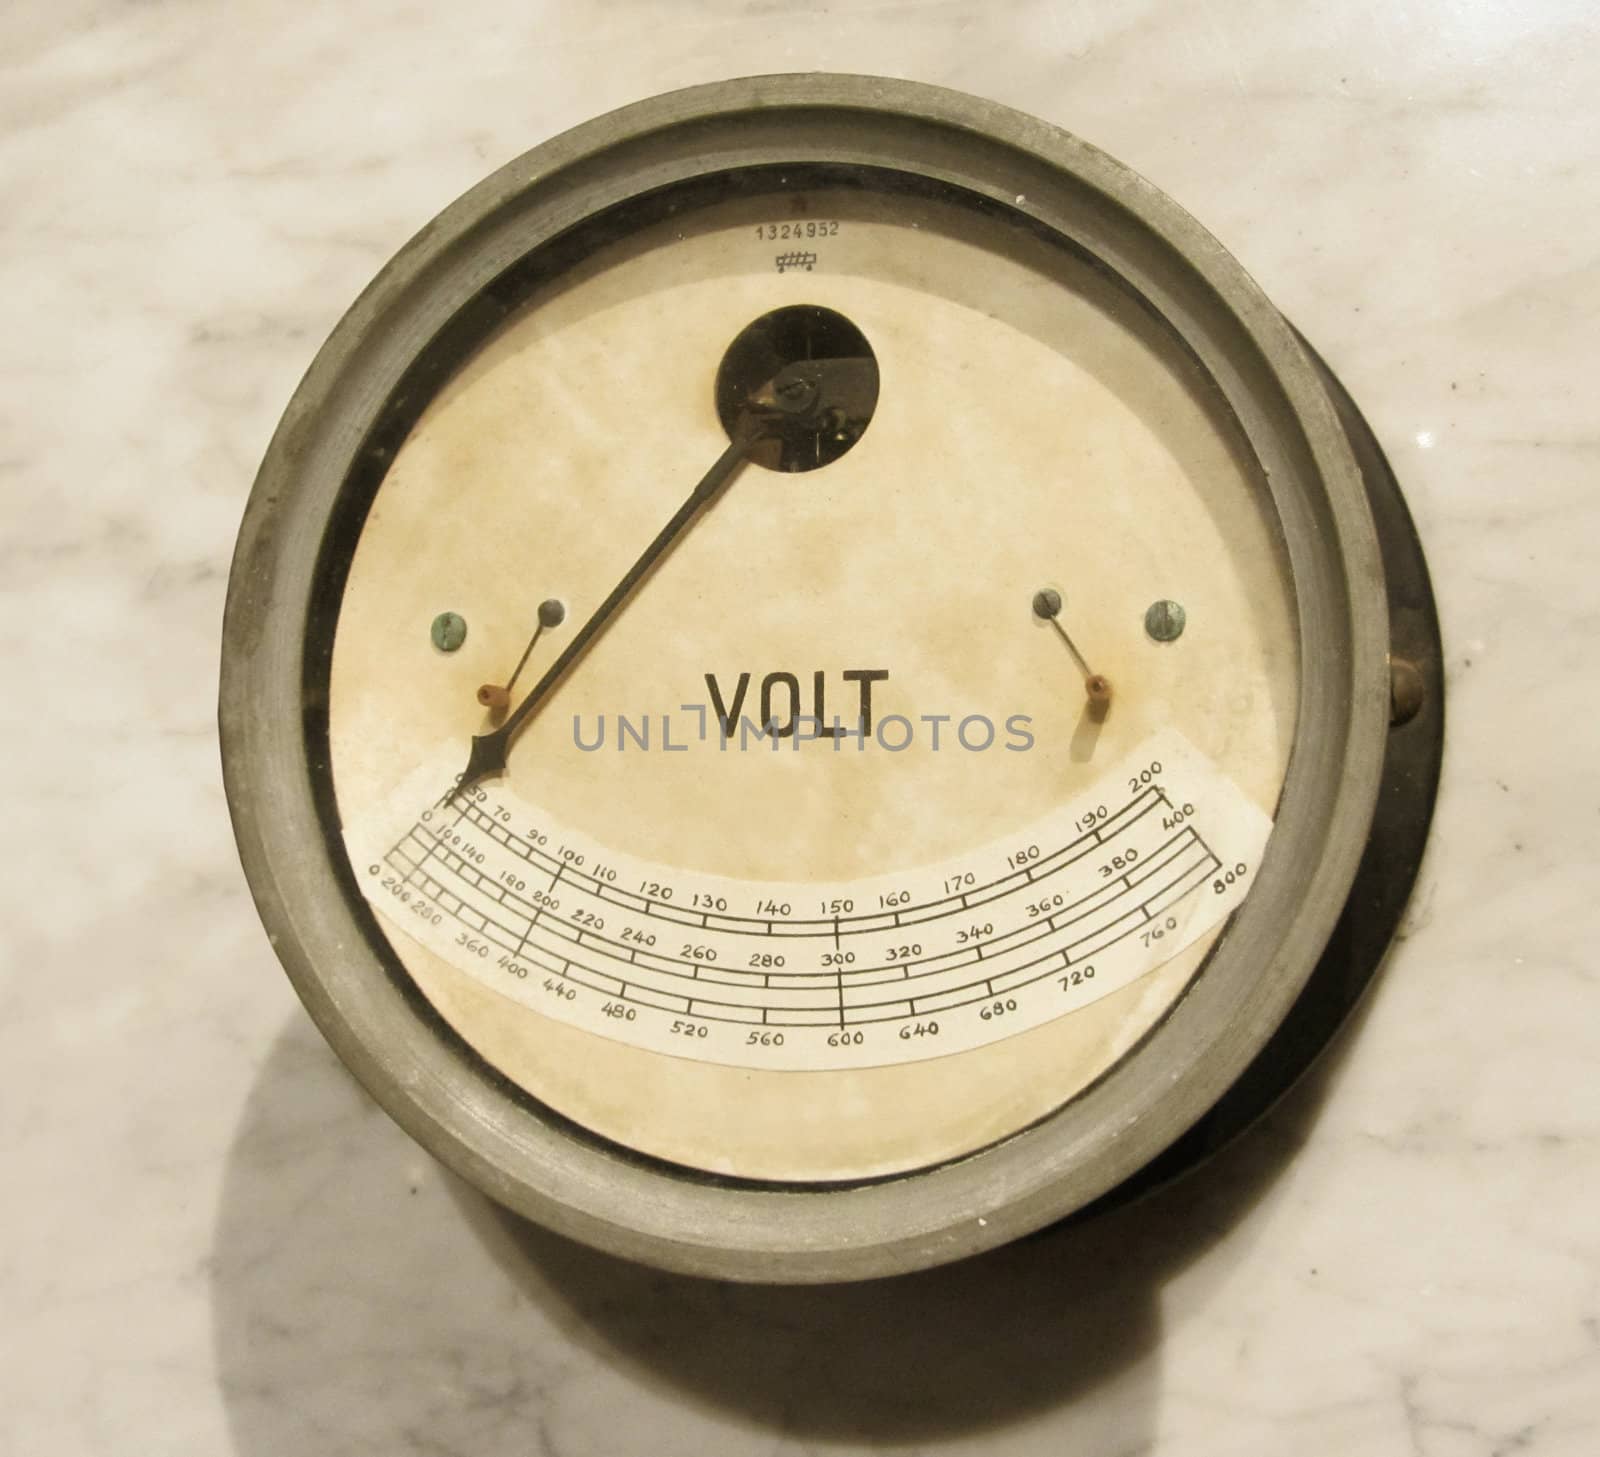 Vintage voltmeter closeup, old electric instrument technology